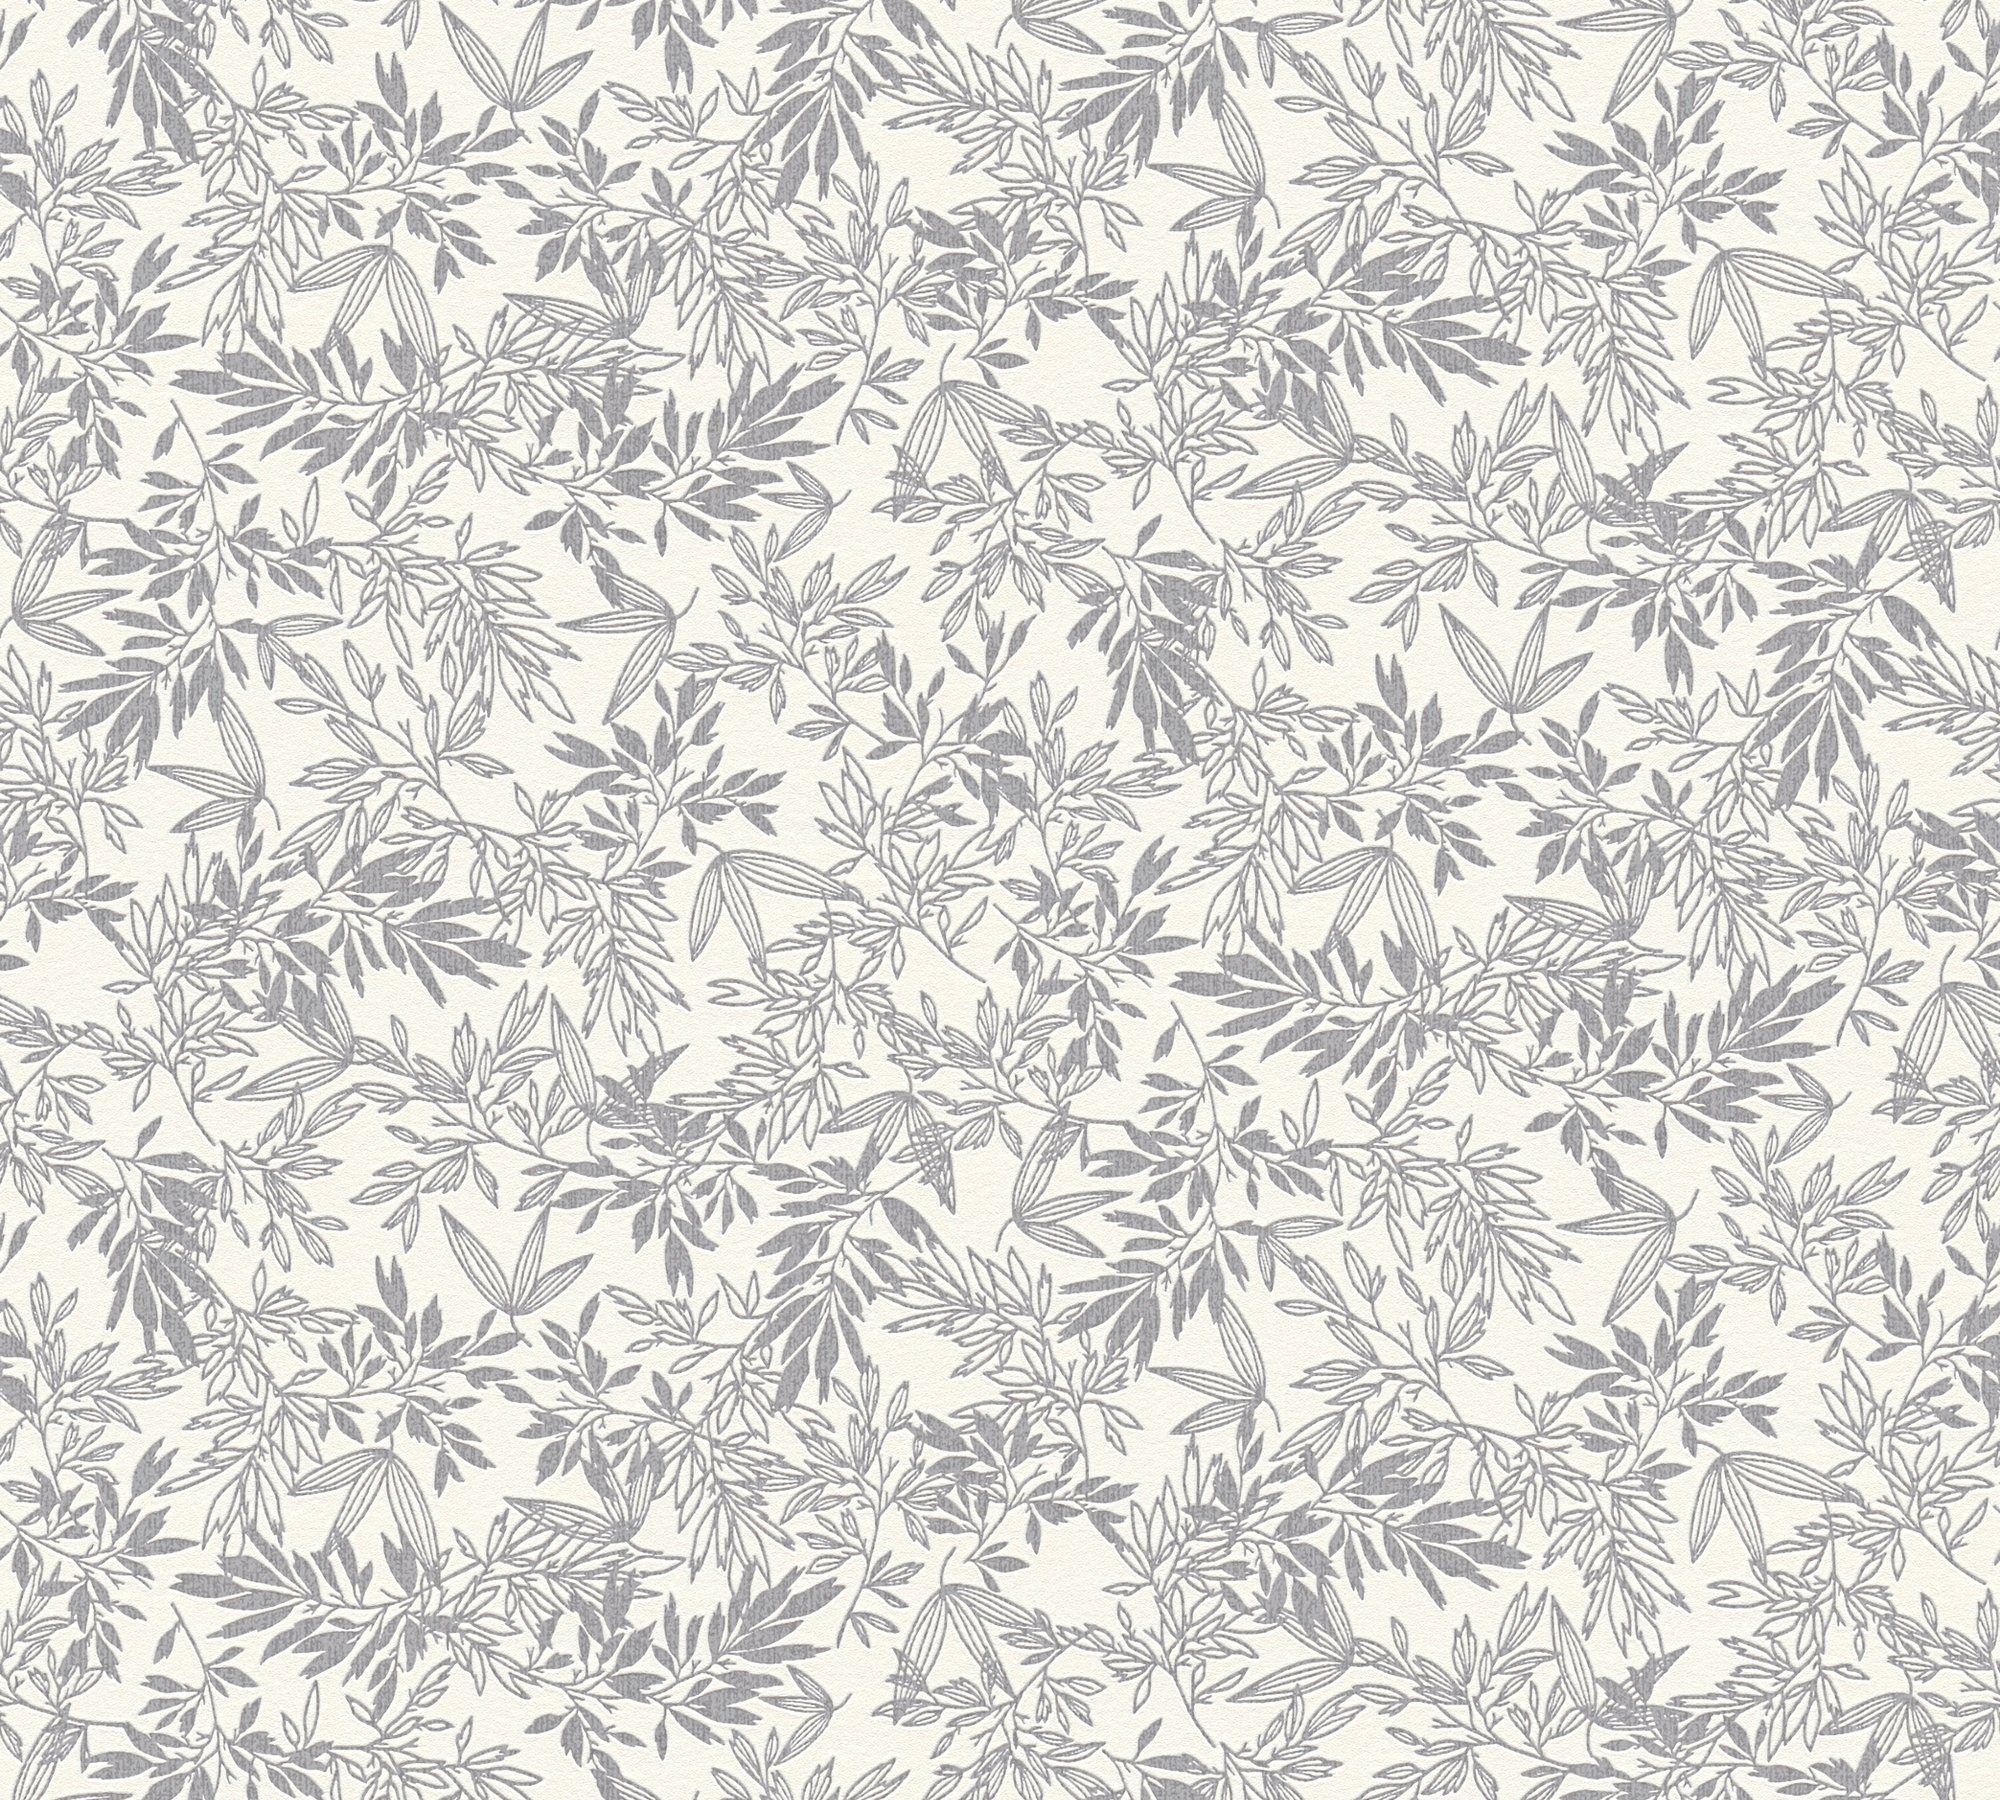 Grau pflanzen A.S. 2 bläter Floral Vliestapete (1 Floral, landhaus Tapete St), Création Attractive strukturiert Hellgrau matt, strukturiert, Grau,Weiß